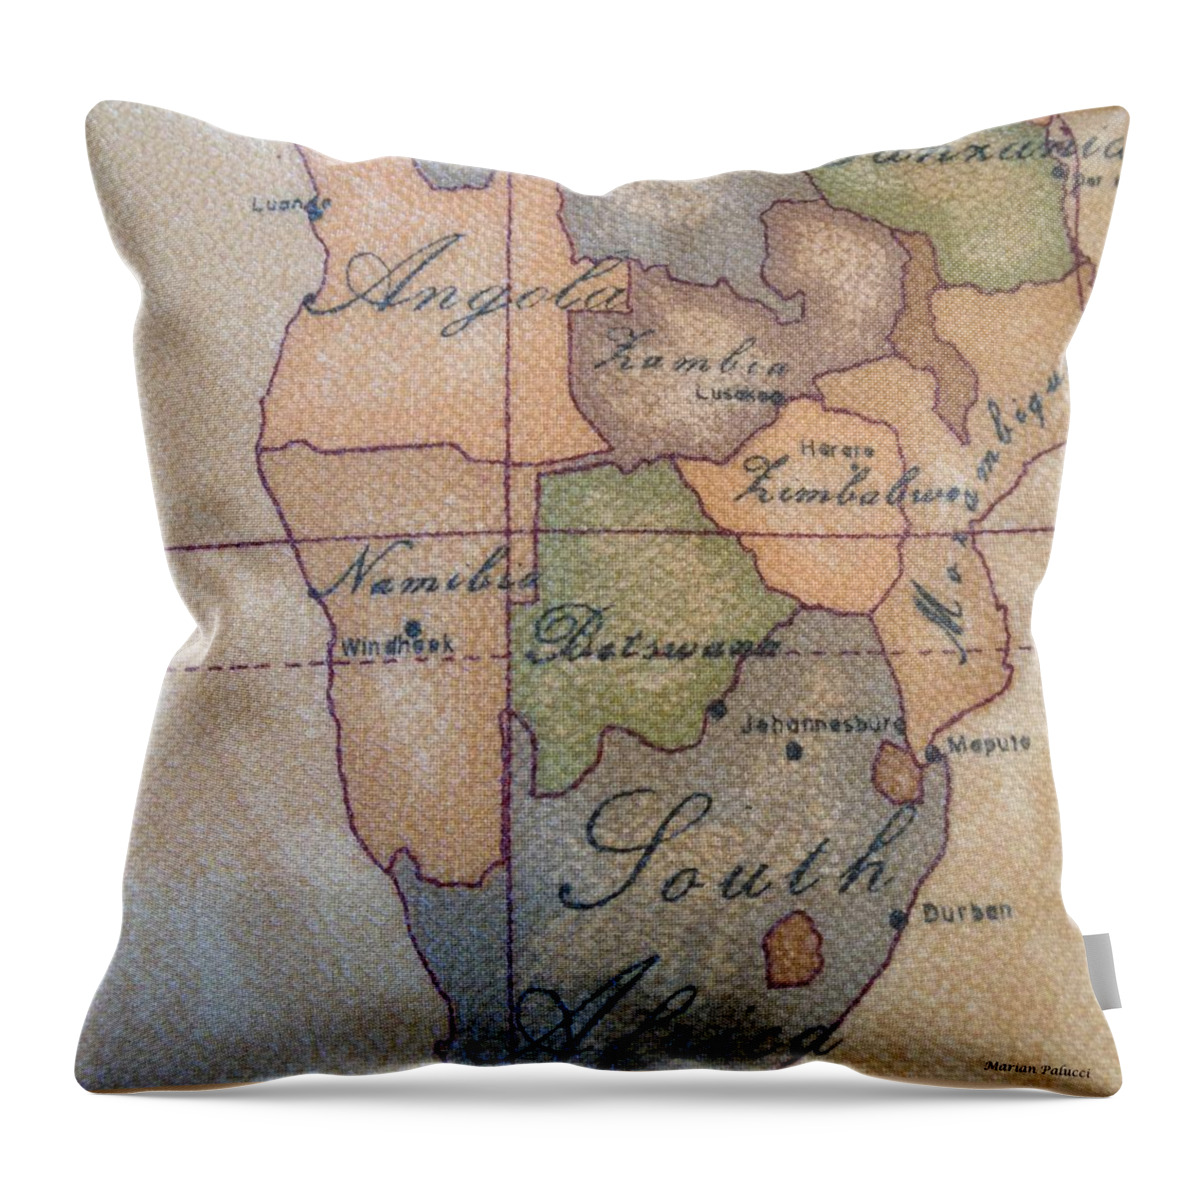 Africa Throw Pillow featuring the photograph Africa by Marian Lonzetta